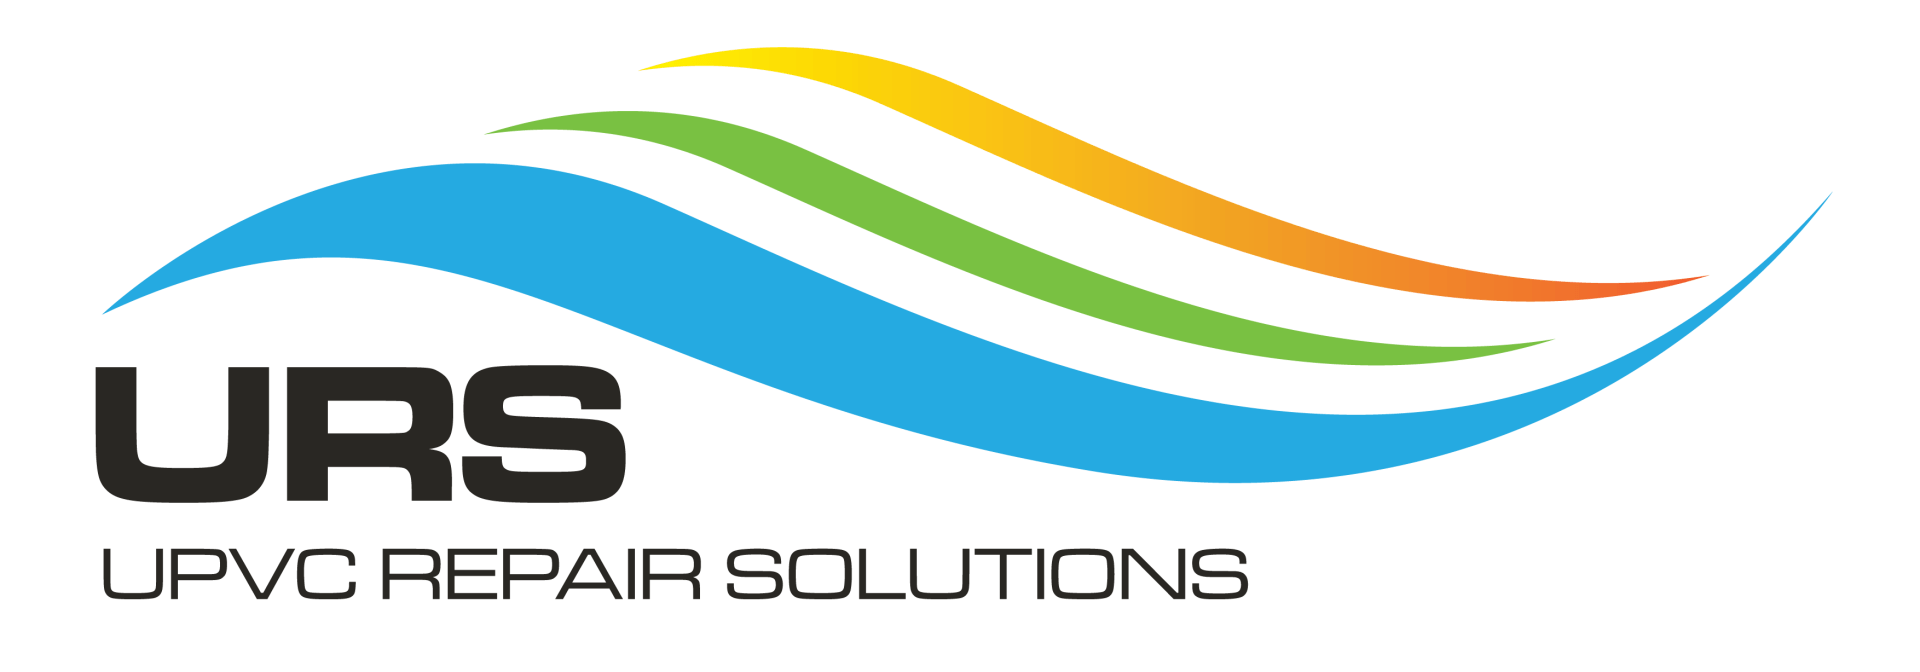 UPVC Repair Solutions